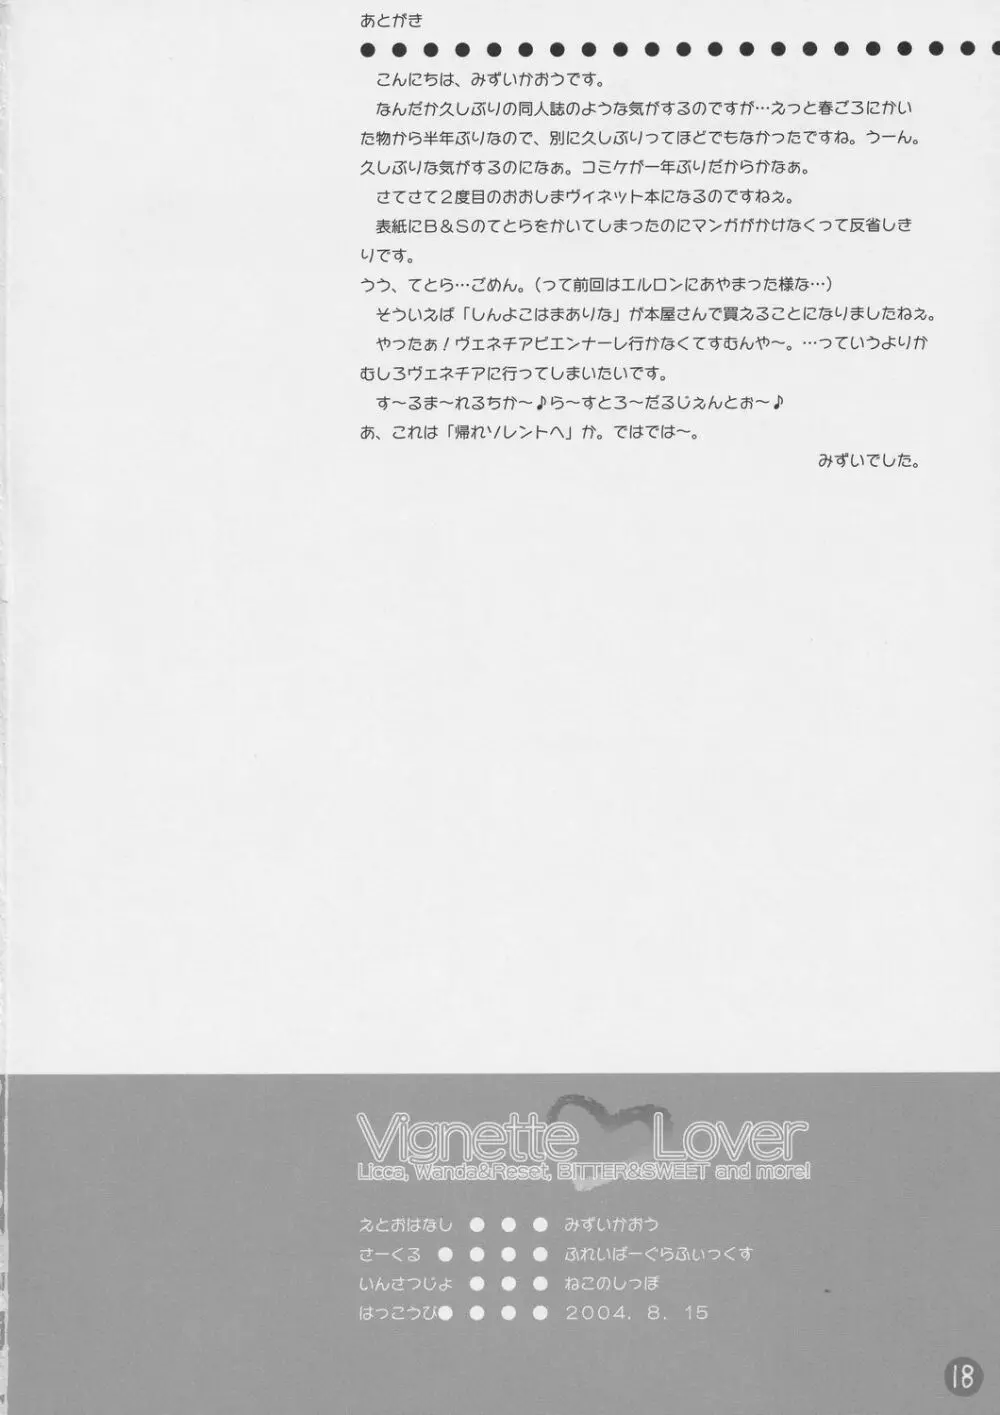 Vignette Lover 17ページ